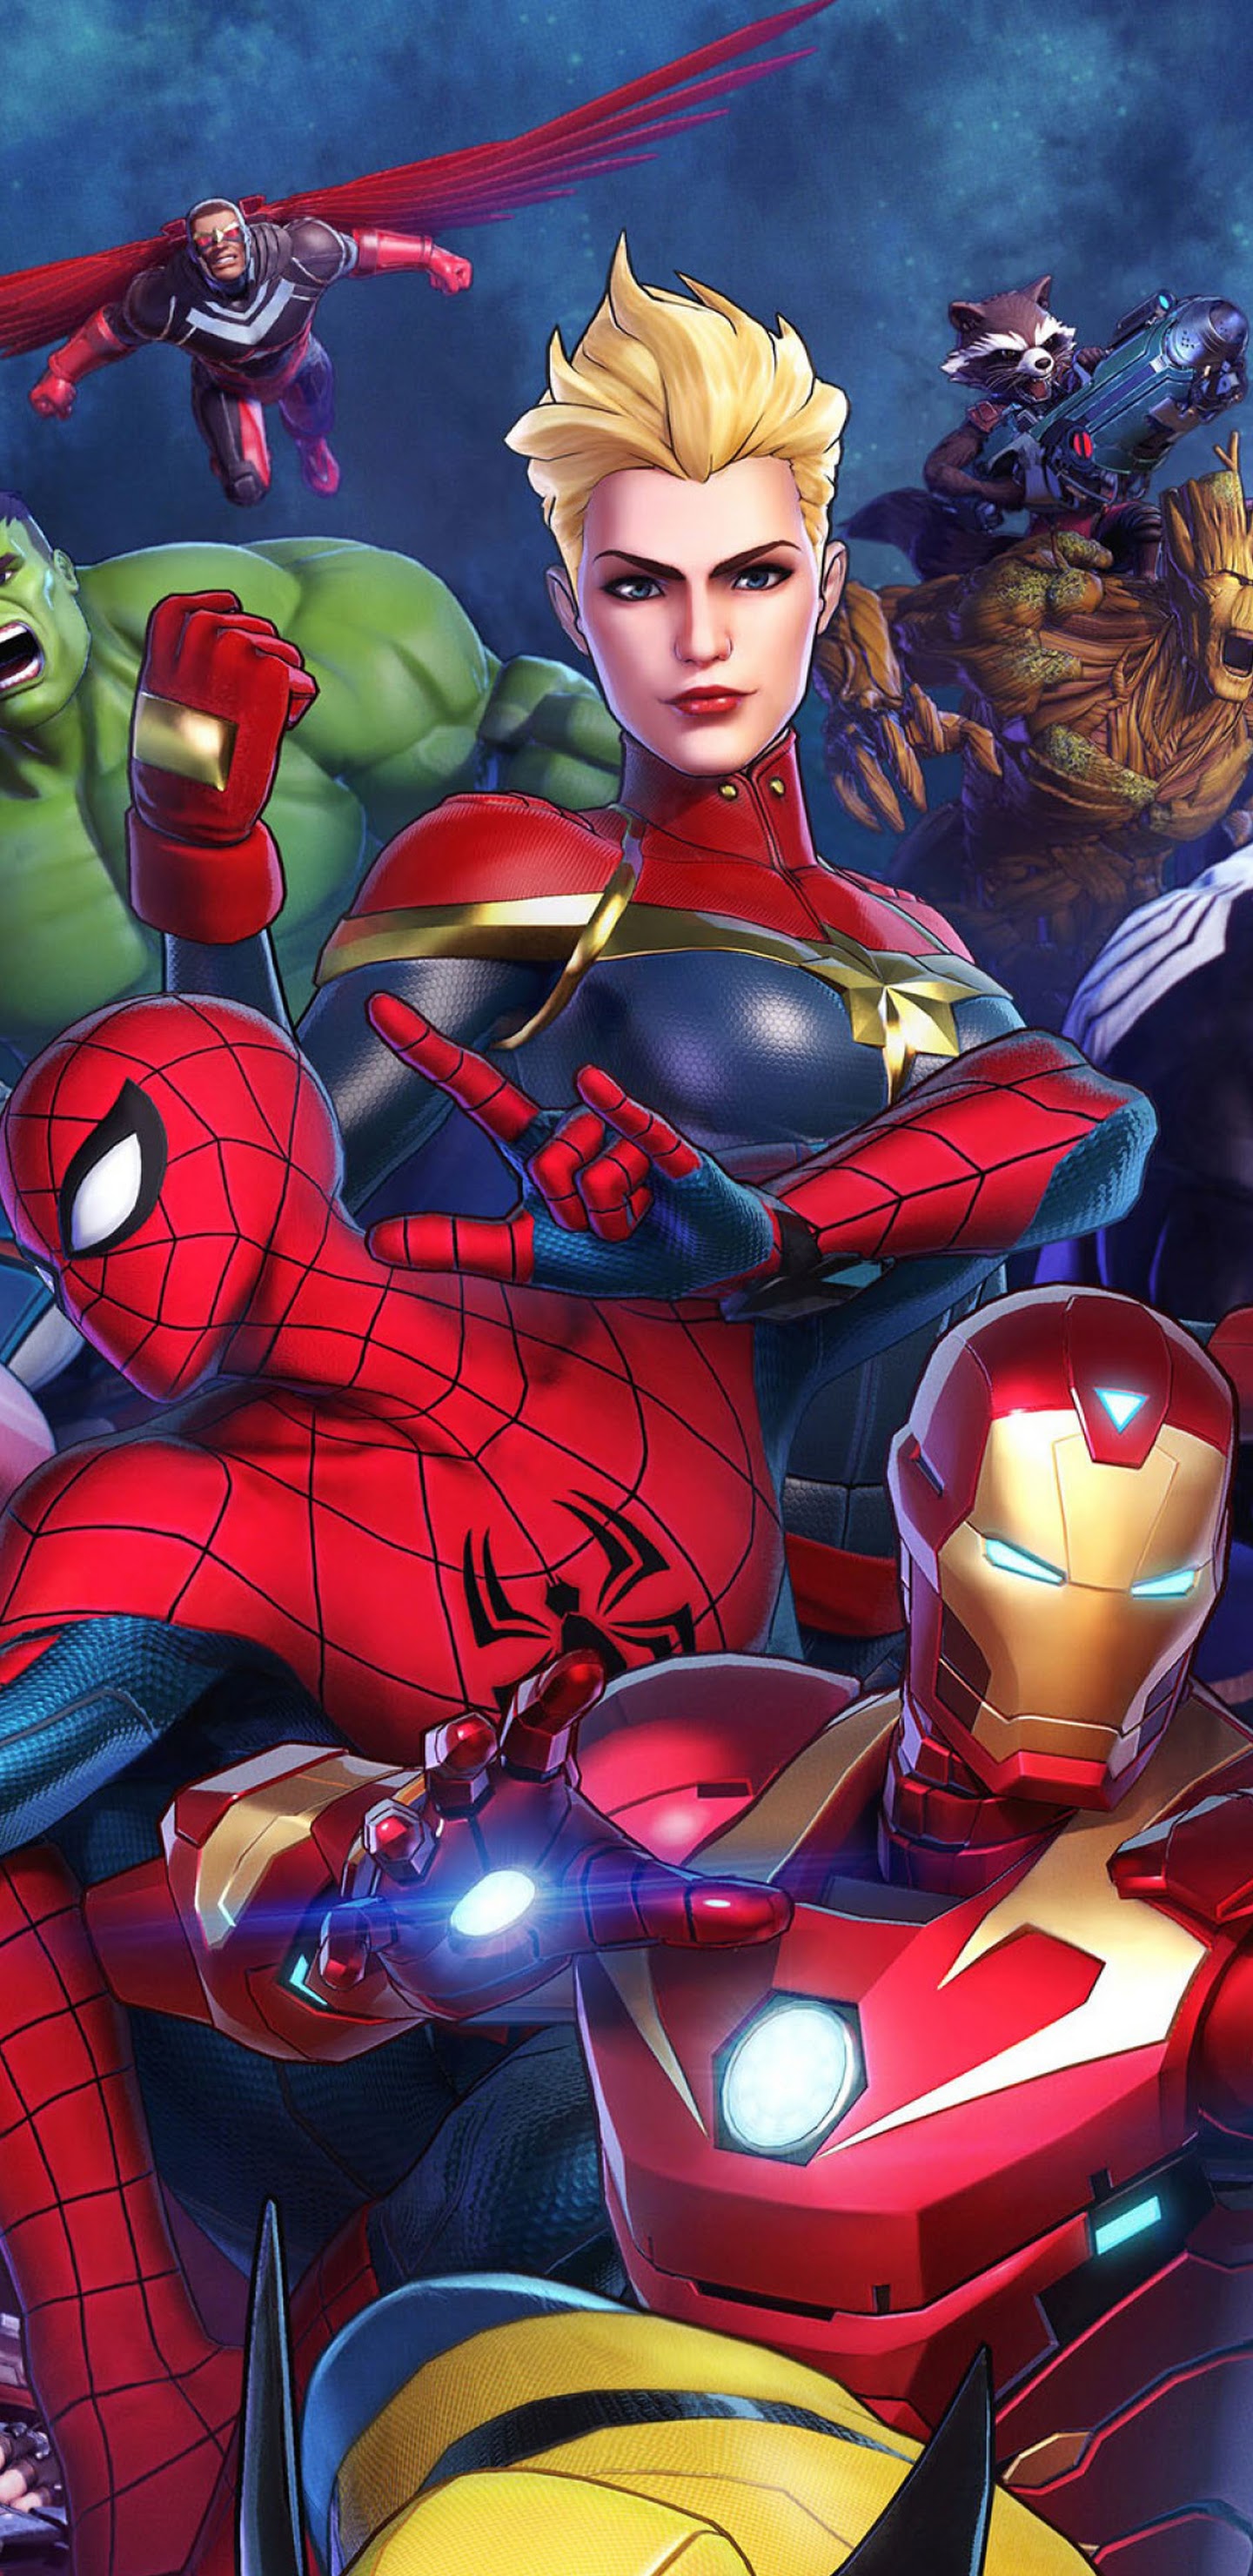 Marvel Ultimate Alliance 3 Characters 4k Wallpaper 46